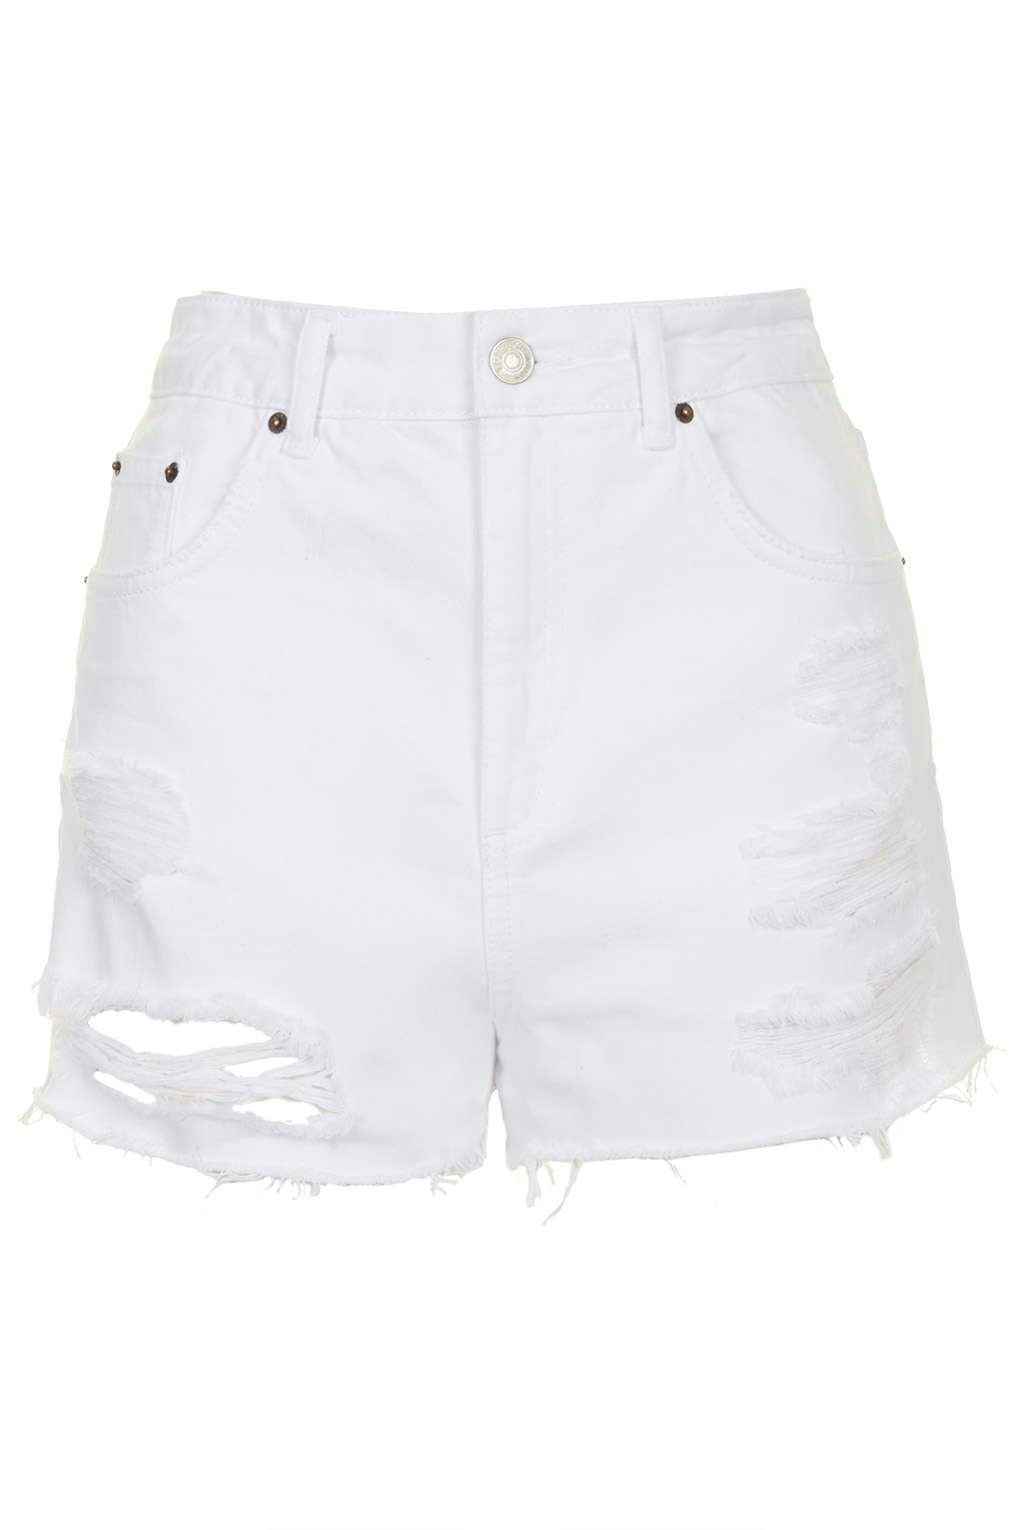 white ripped shorts womens